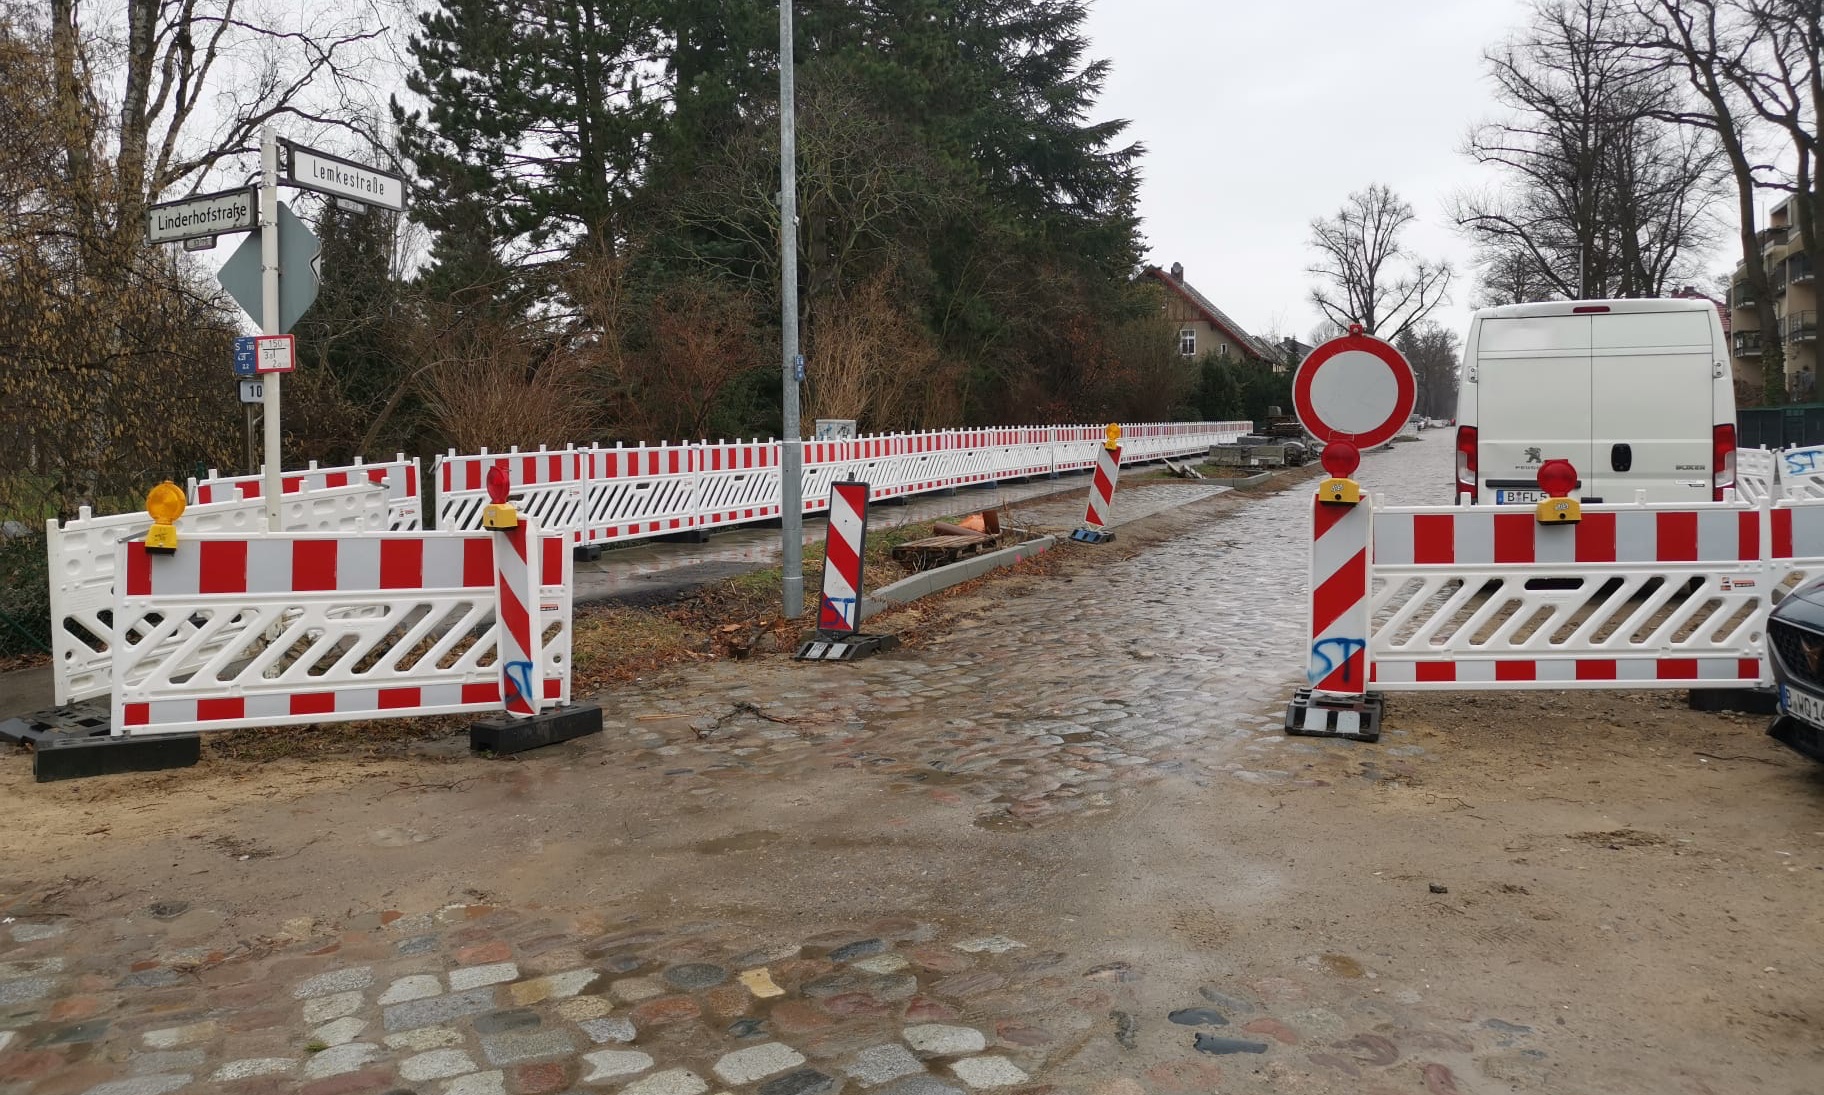 Update: Ausbau Lemkestraße